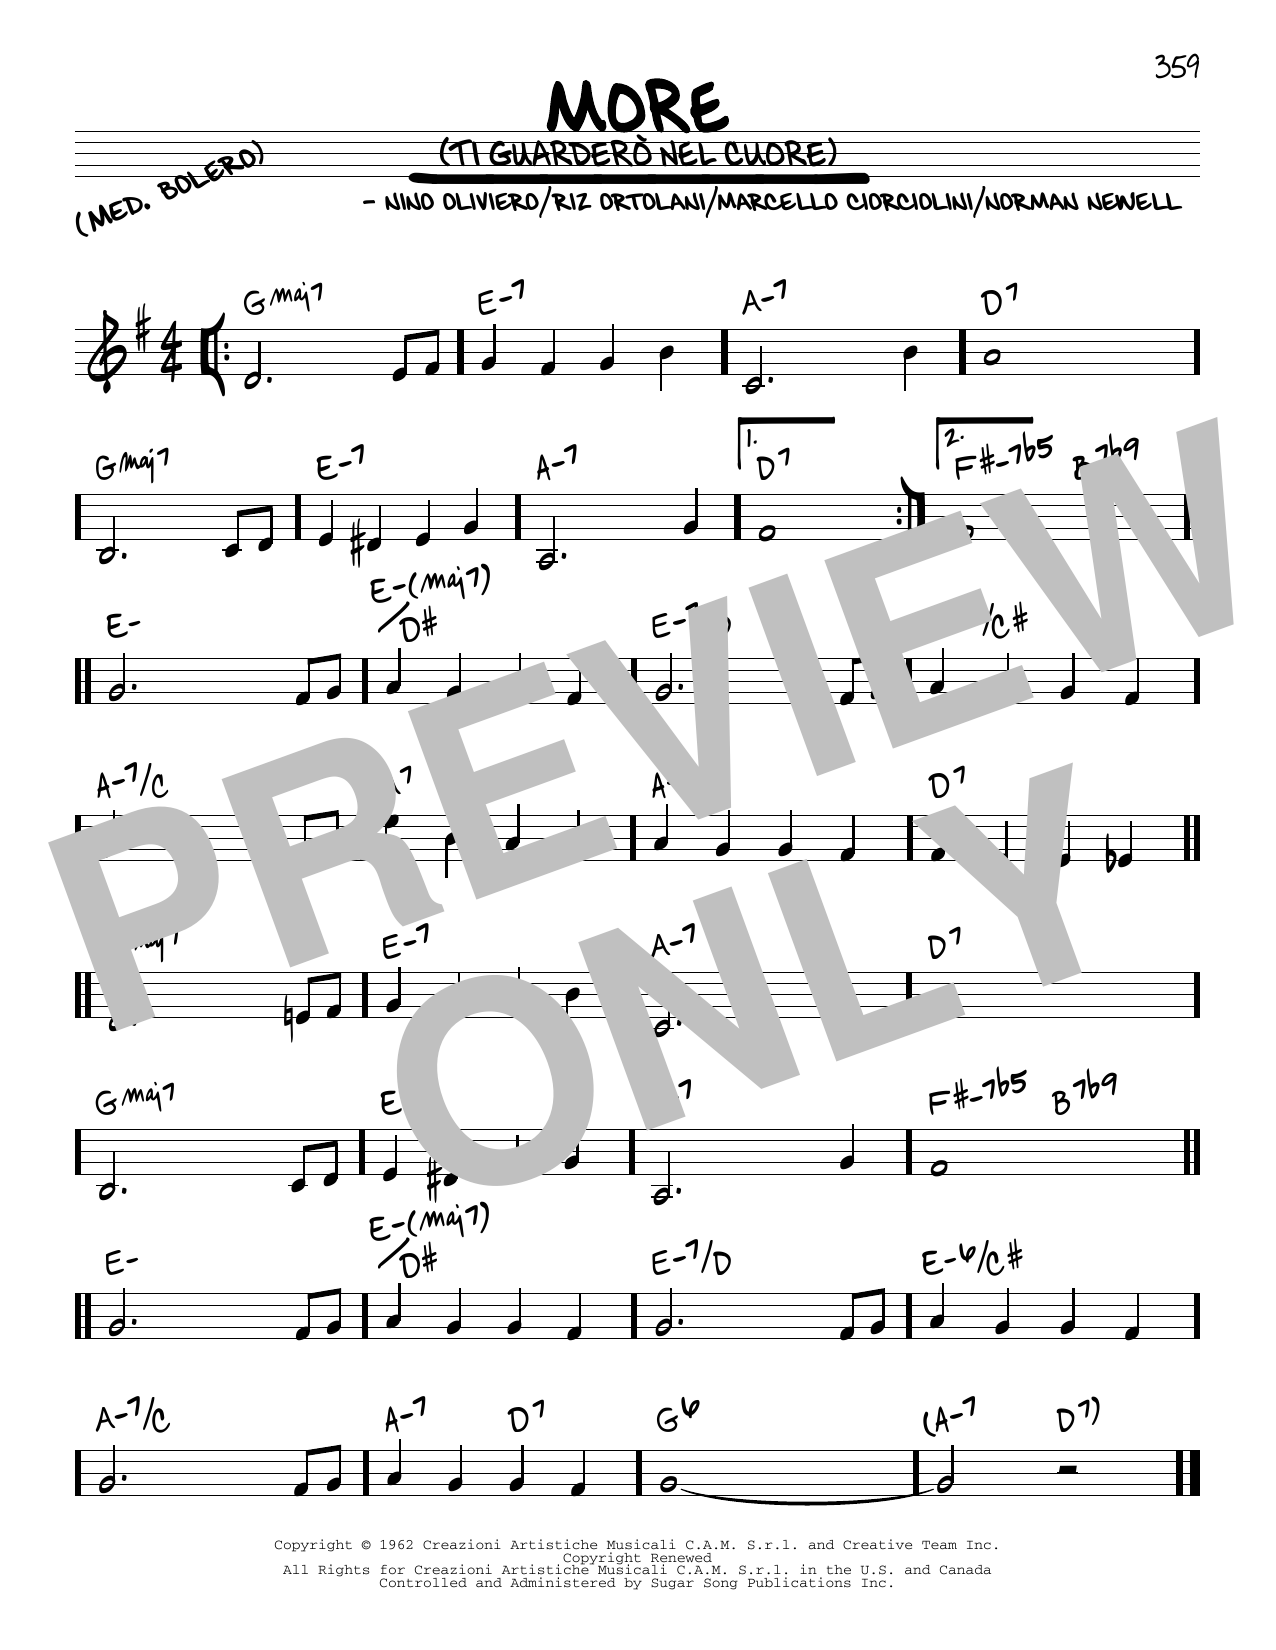 Download Marcello Ciorciolini More (Ti Guardero Nel Cuore) Sheet Music and learn how to play Guitar Tab PDF digital score in minutes